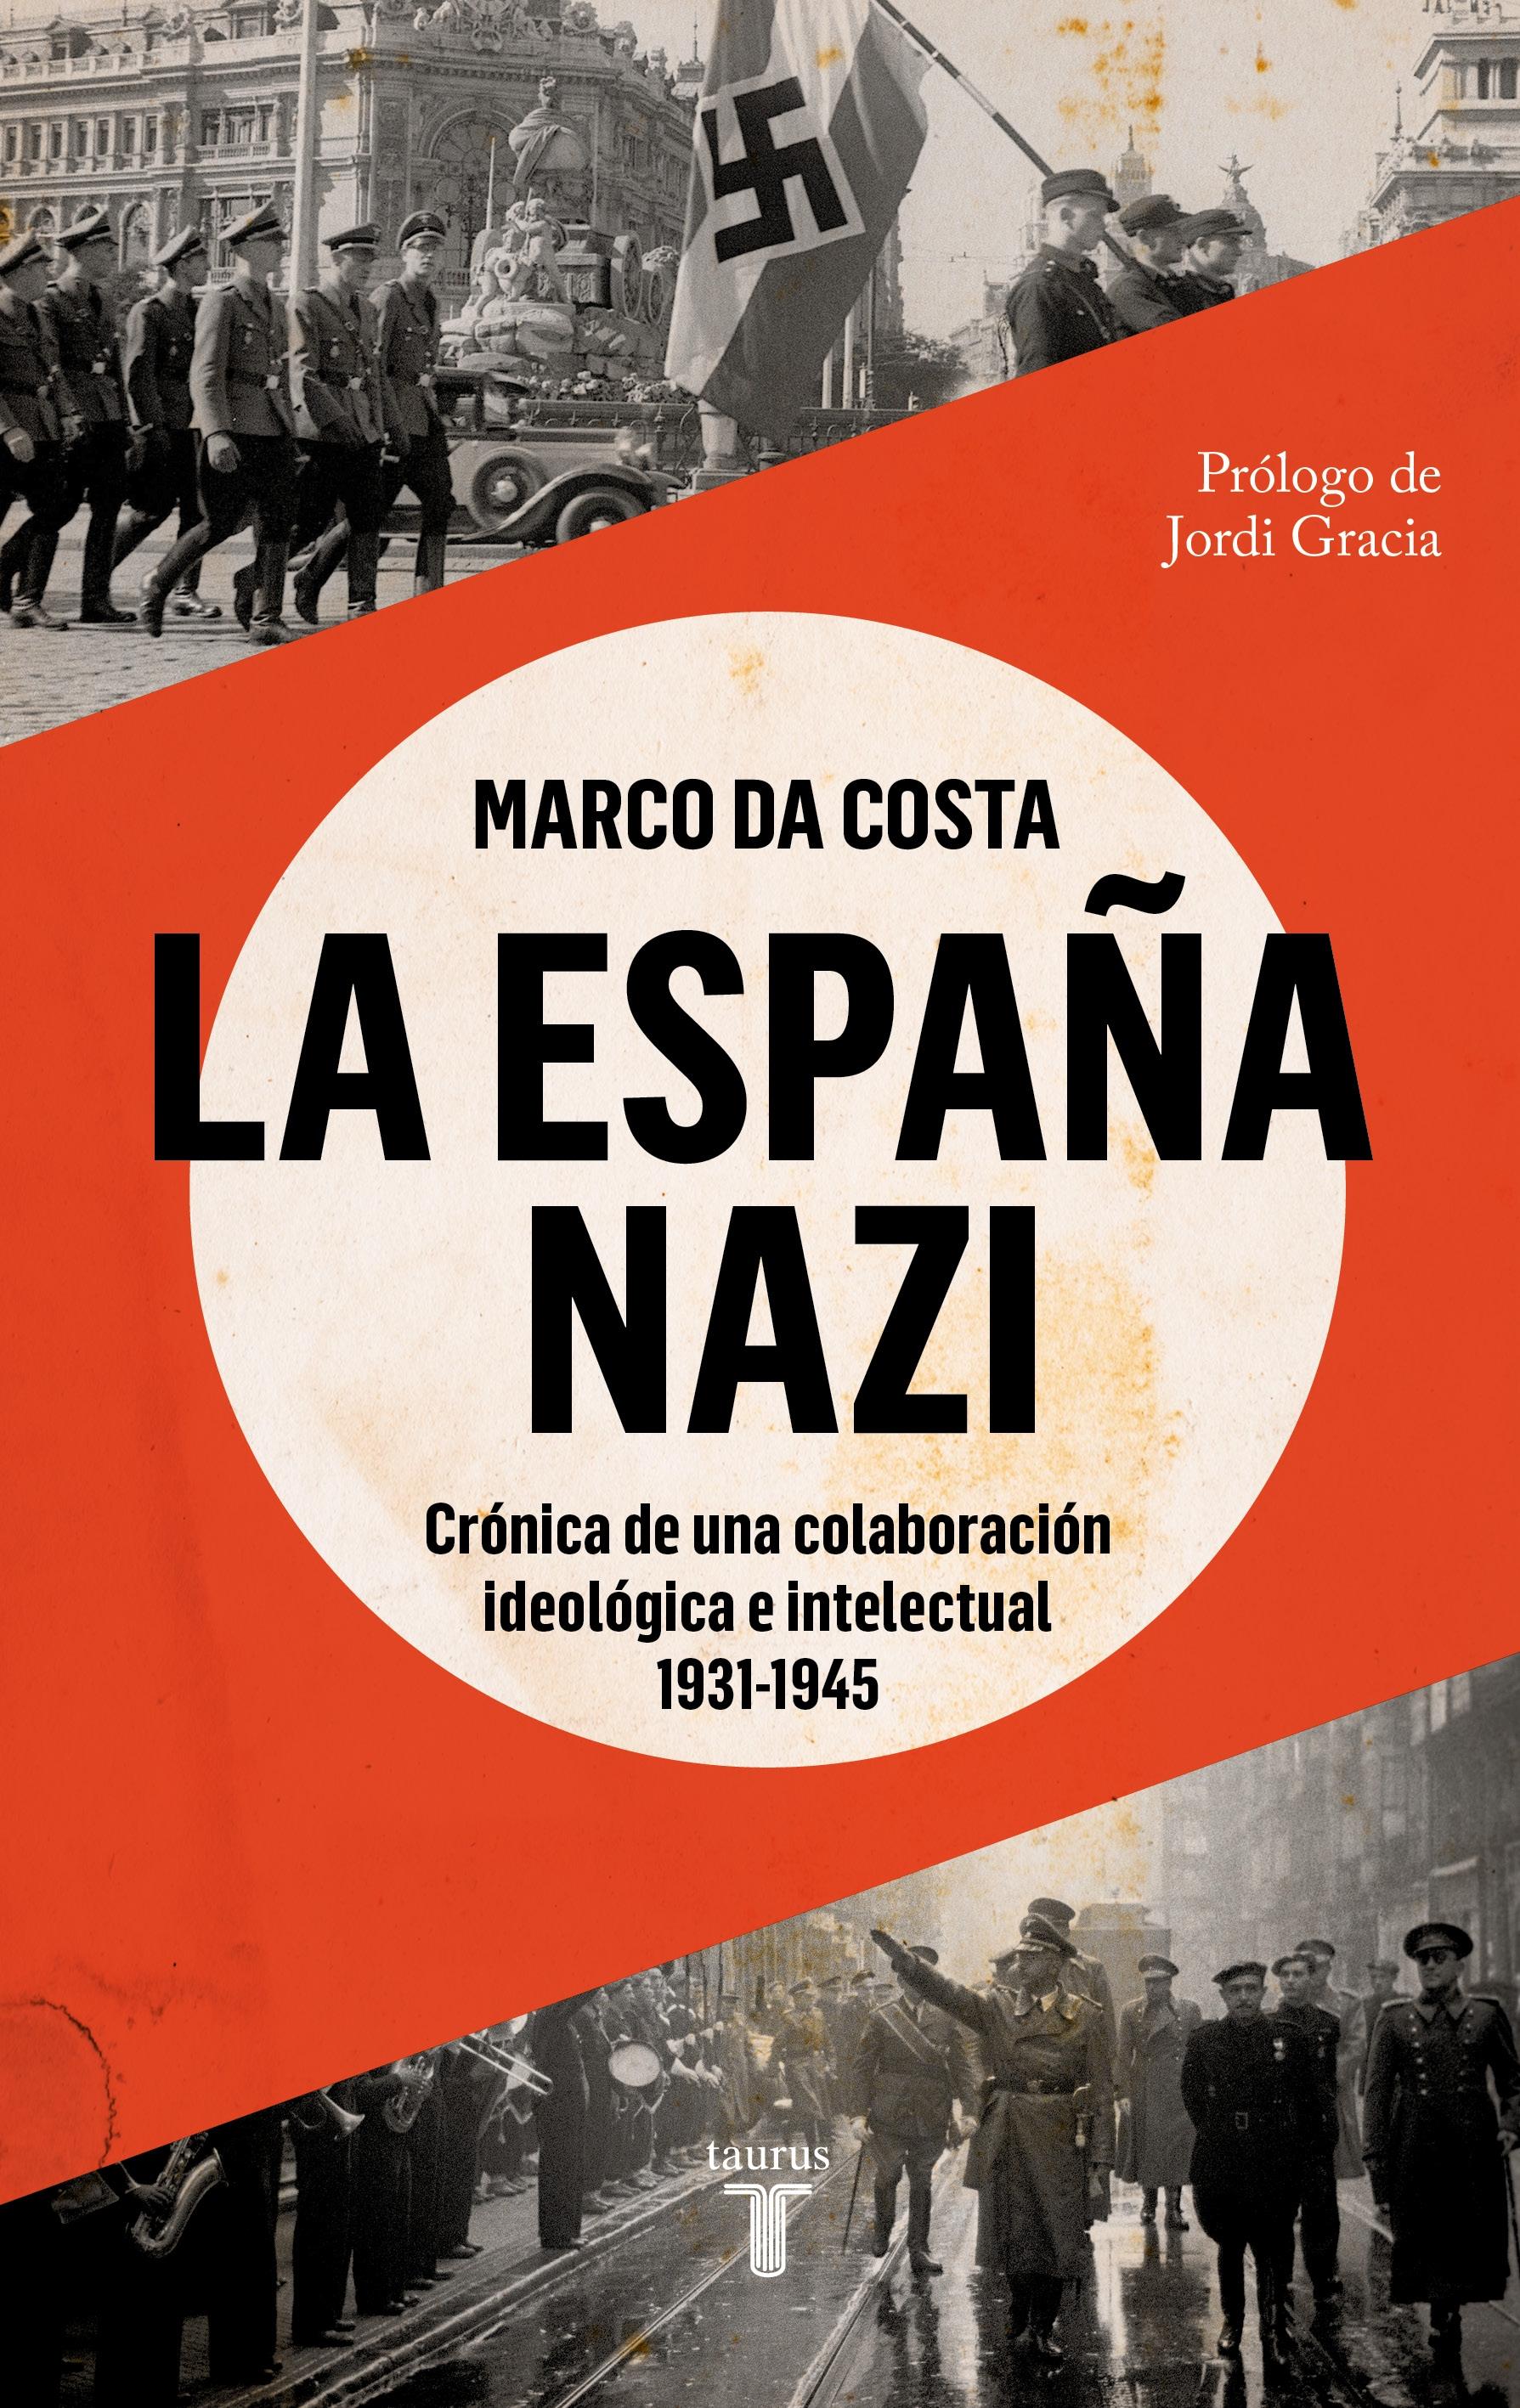 La España Nazi "Crónica de una Colaboración Ideológica e Intelectual, 1931-1945"